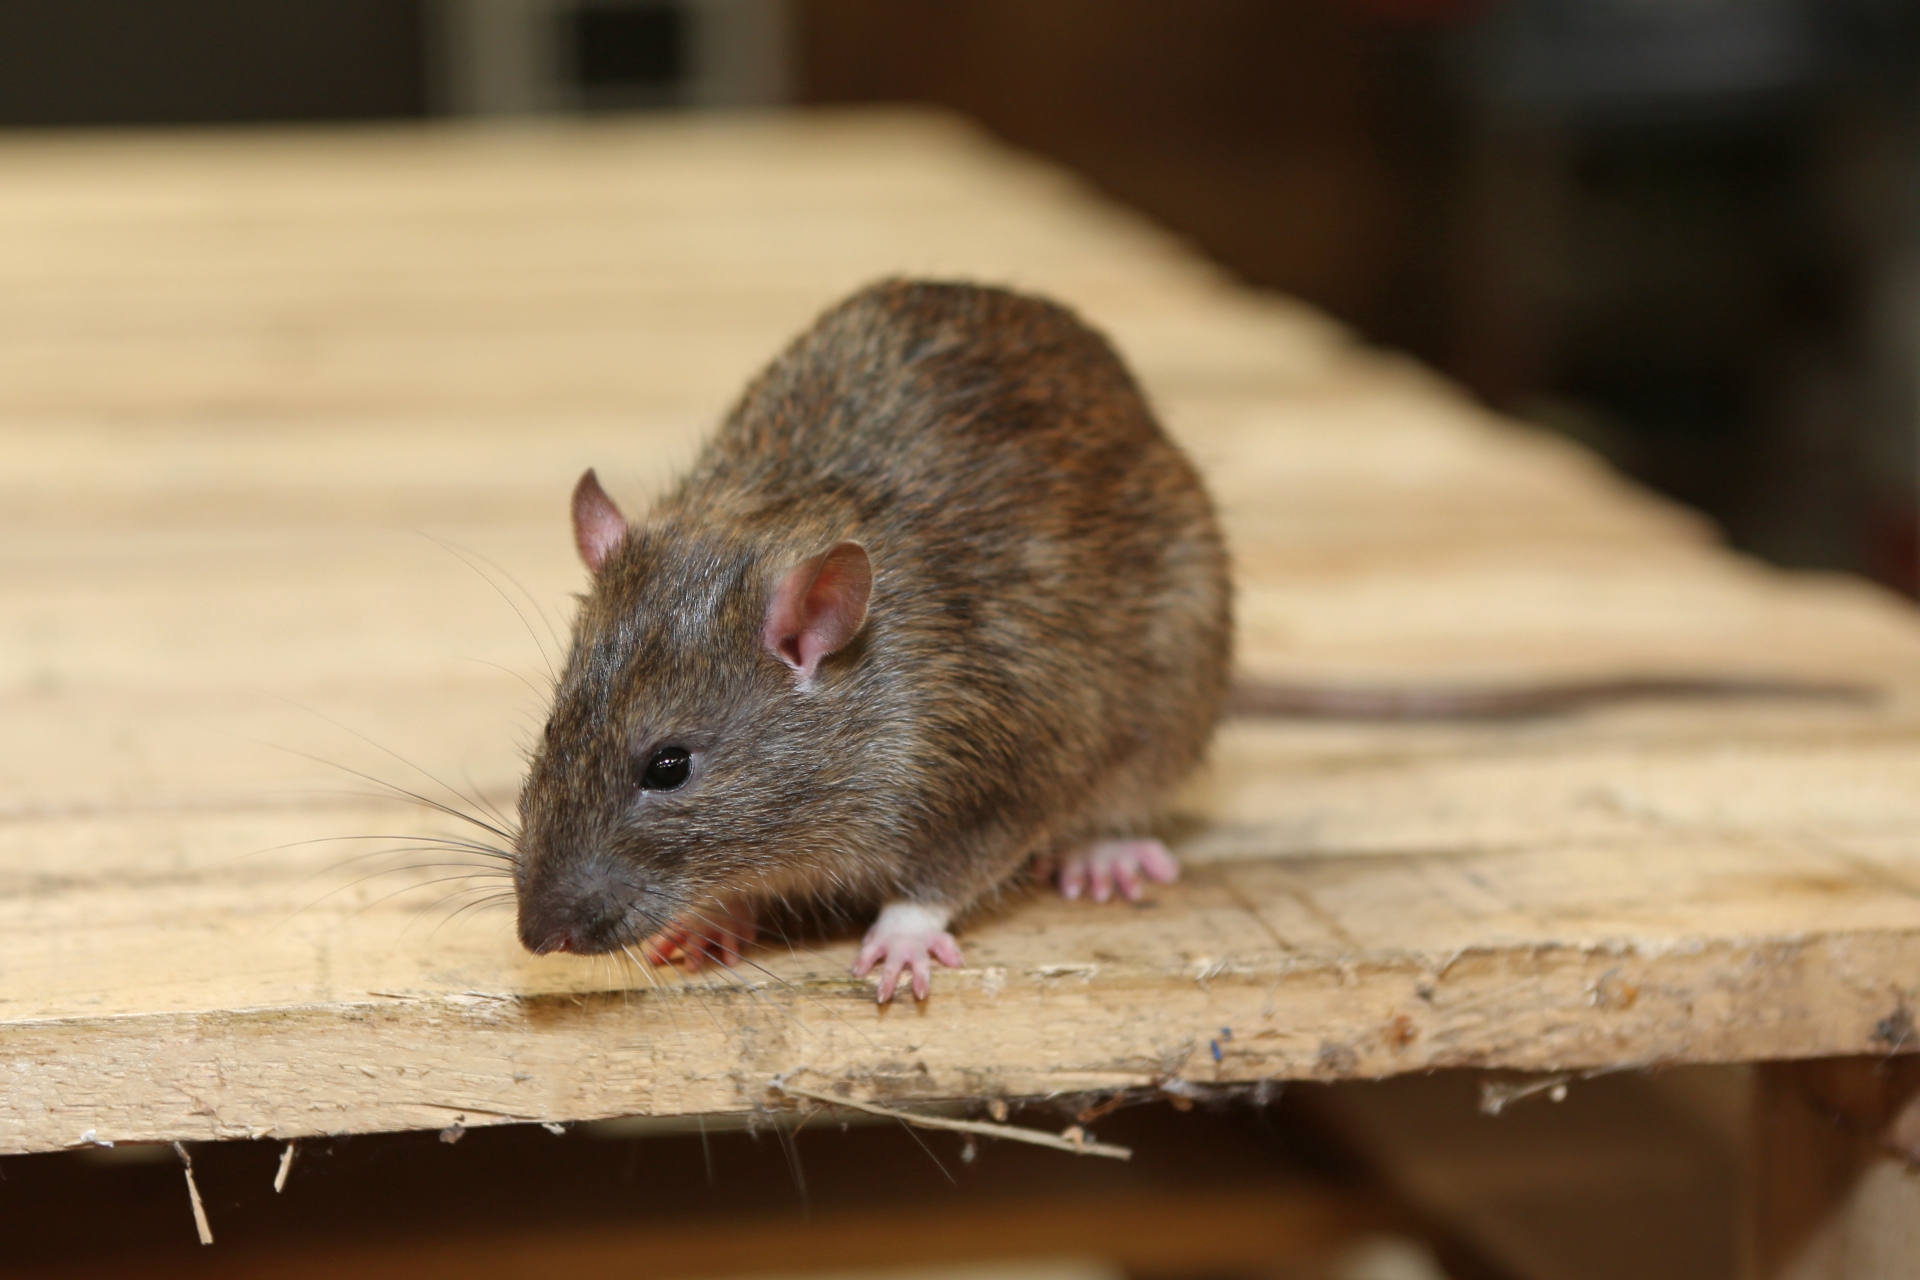 Rat Control, Pest Control in Barnes, Castelnau, SW13. Call Now 020 8166 9746